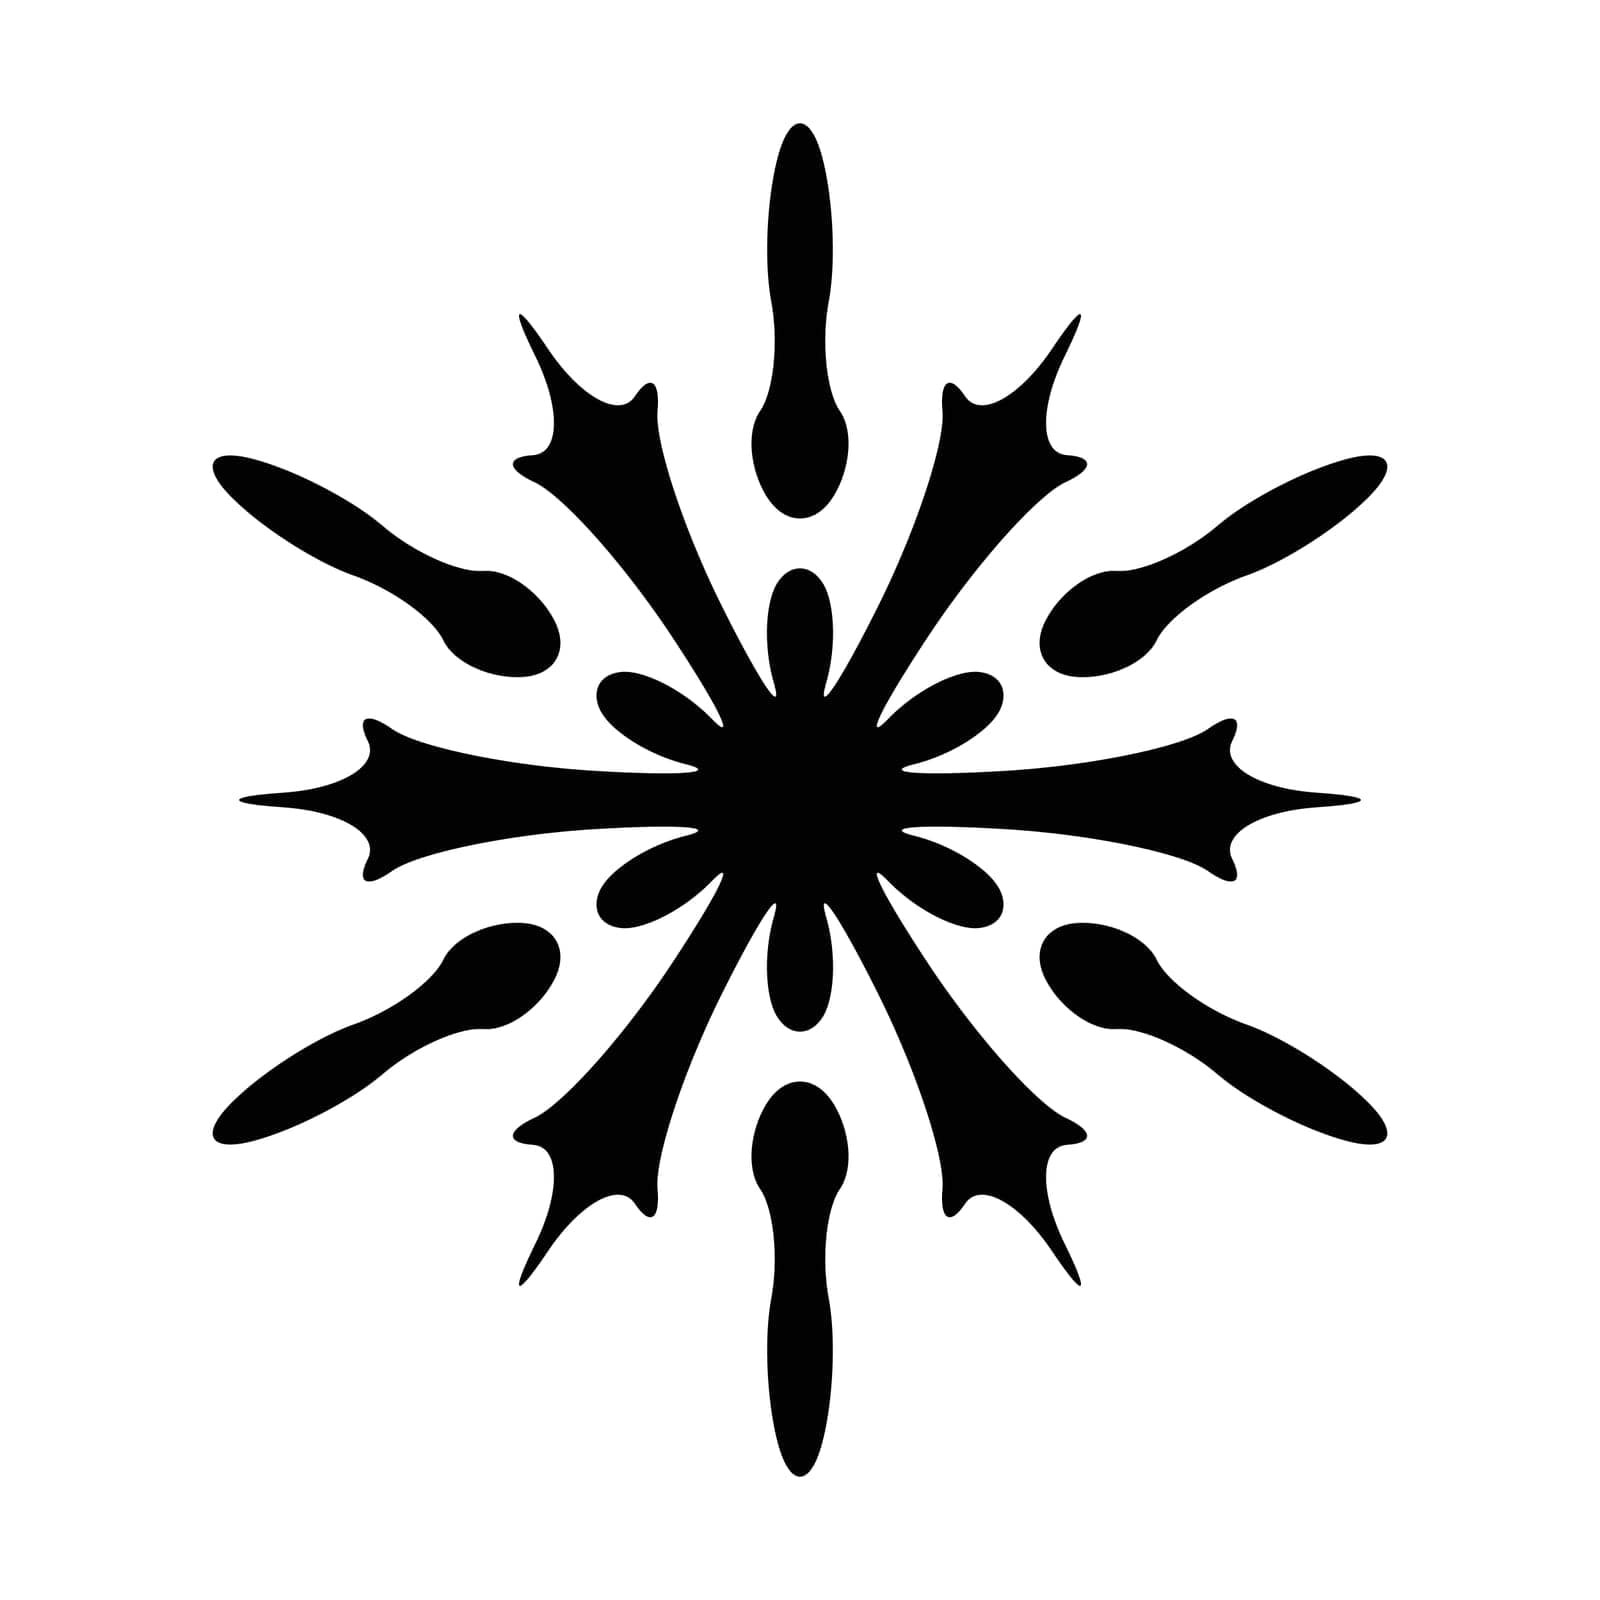 Simple Snowflake Isolated by benjaminlion